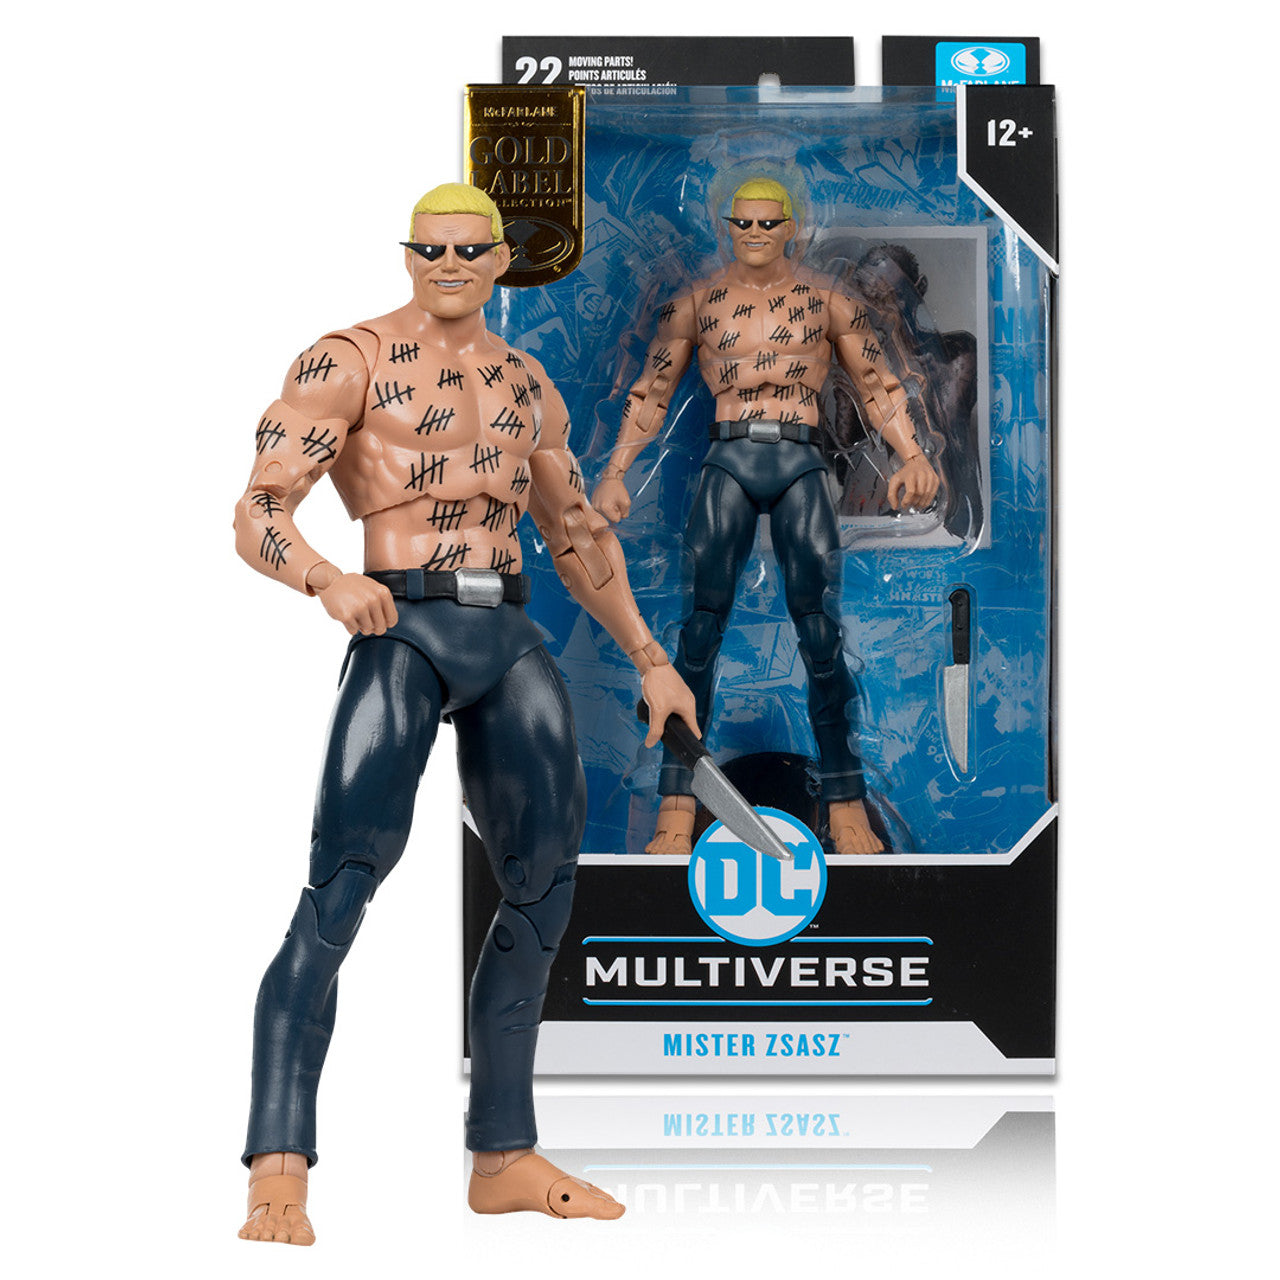 DC Multiverse Mister Zsasz Gold Label - McFarlane Toys